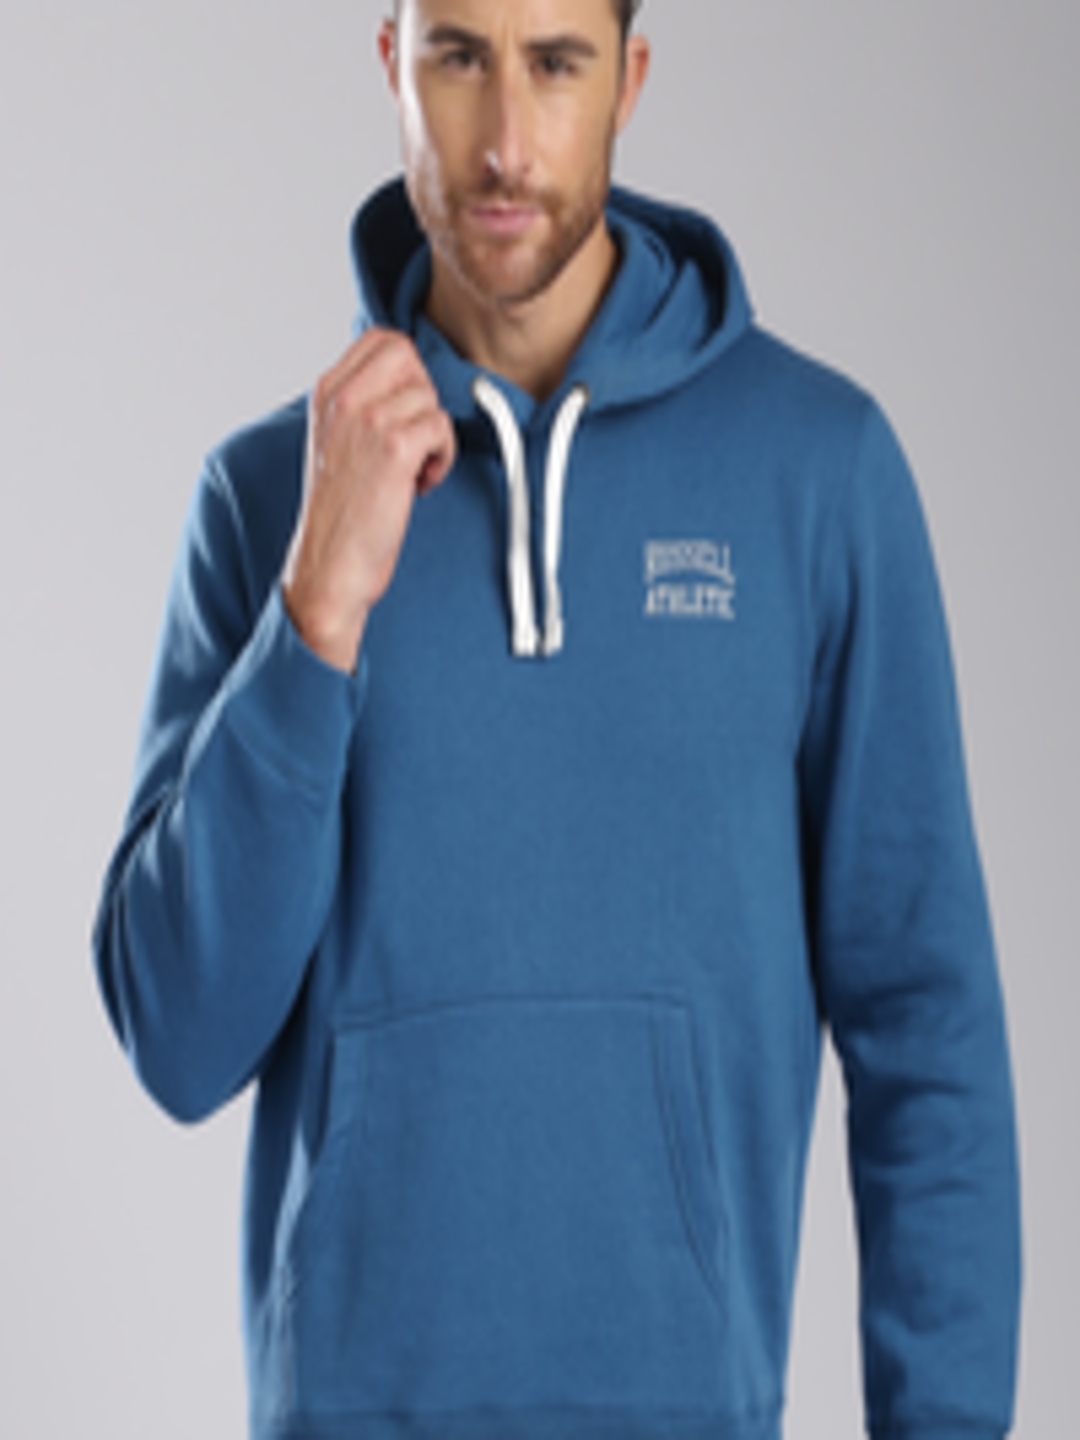 Buy Russell Athletic Blue A5 046 2 Hooded Sweatshirt - Sweatshirts for ...